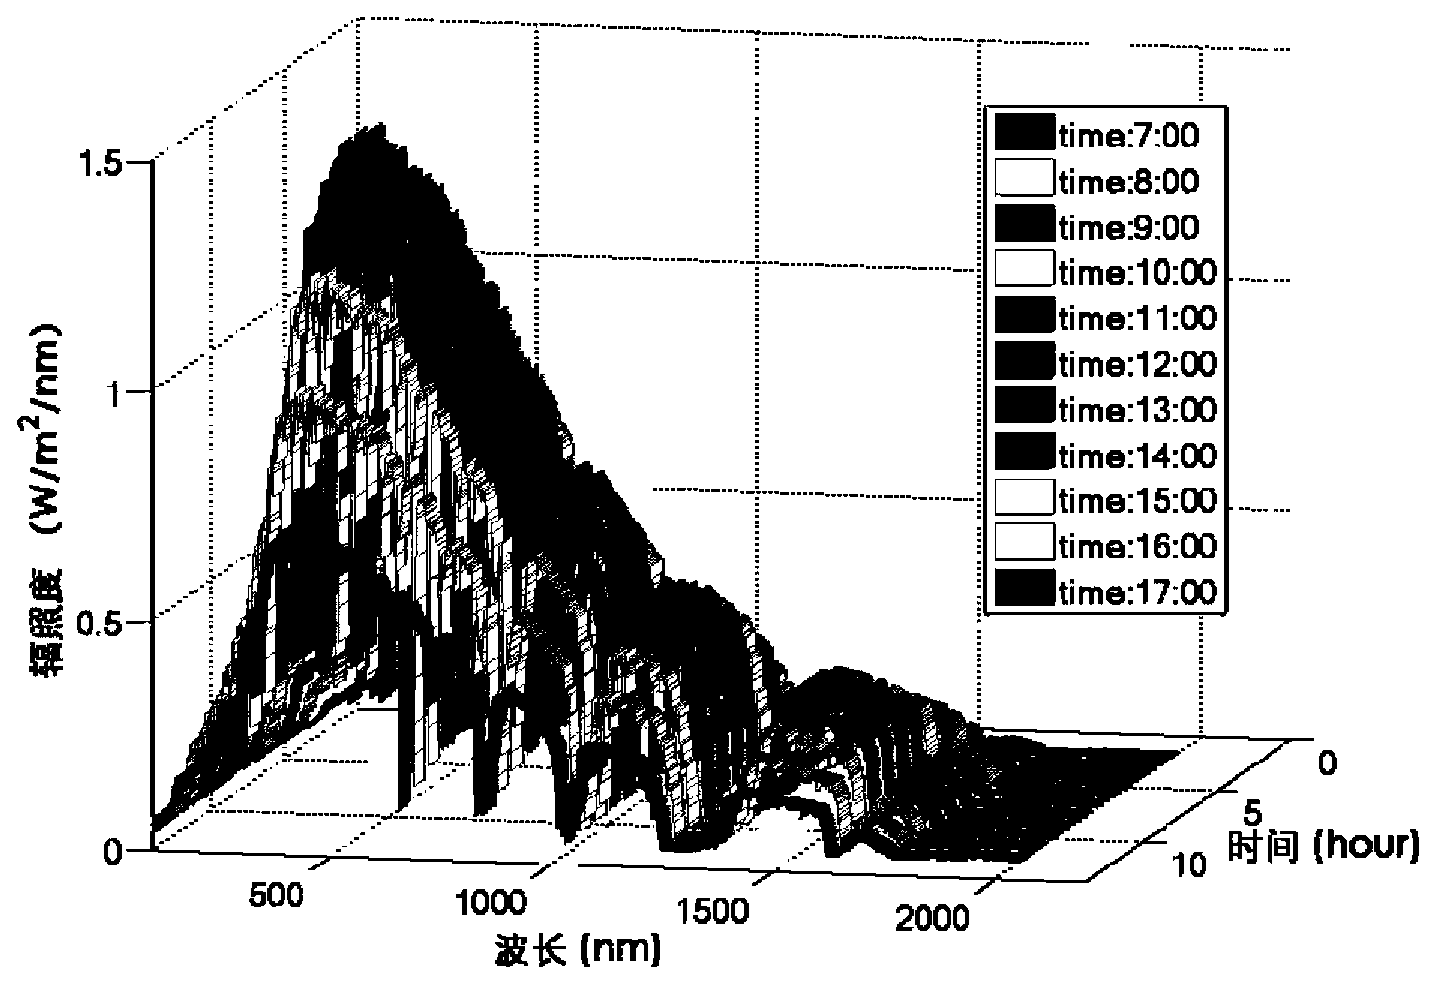 Spectral type solar radiance measuring instrument